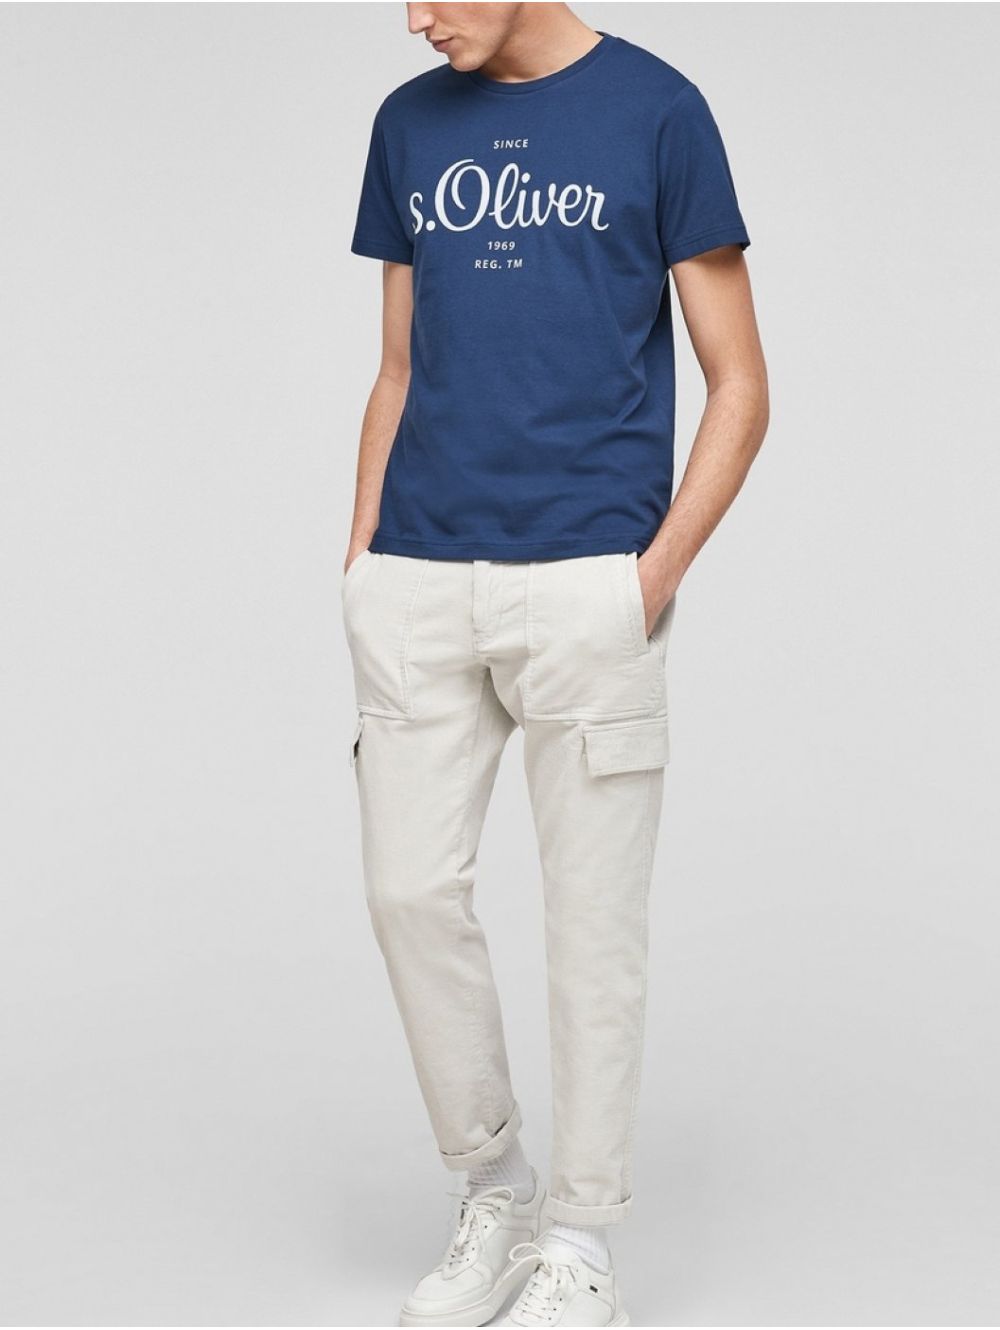 T-Shirt jersey Ocean Blue blue Men\'s 2057432-5693 S.OLIVER short-sleeved